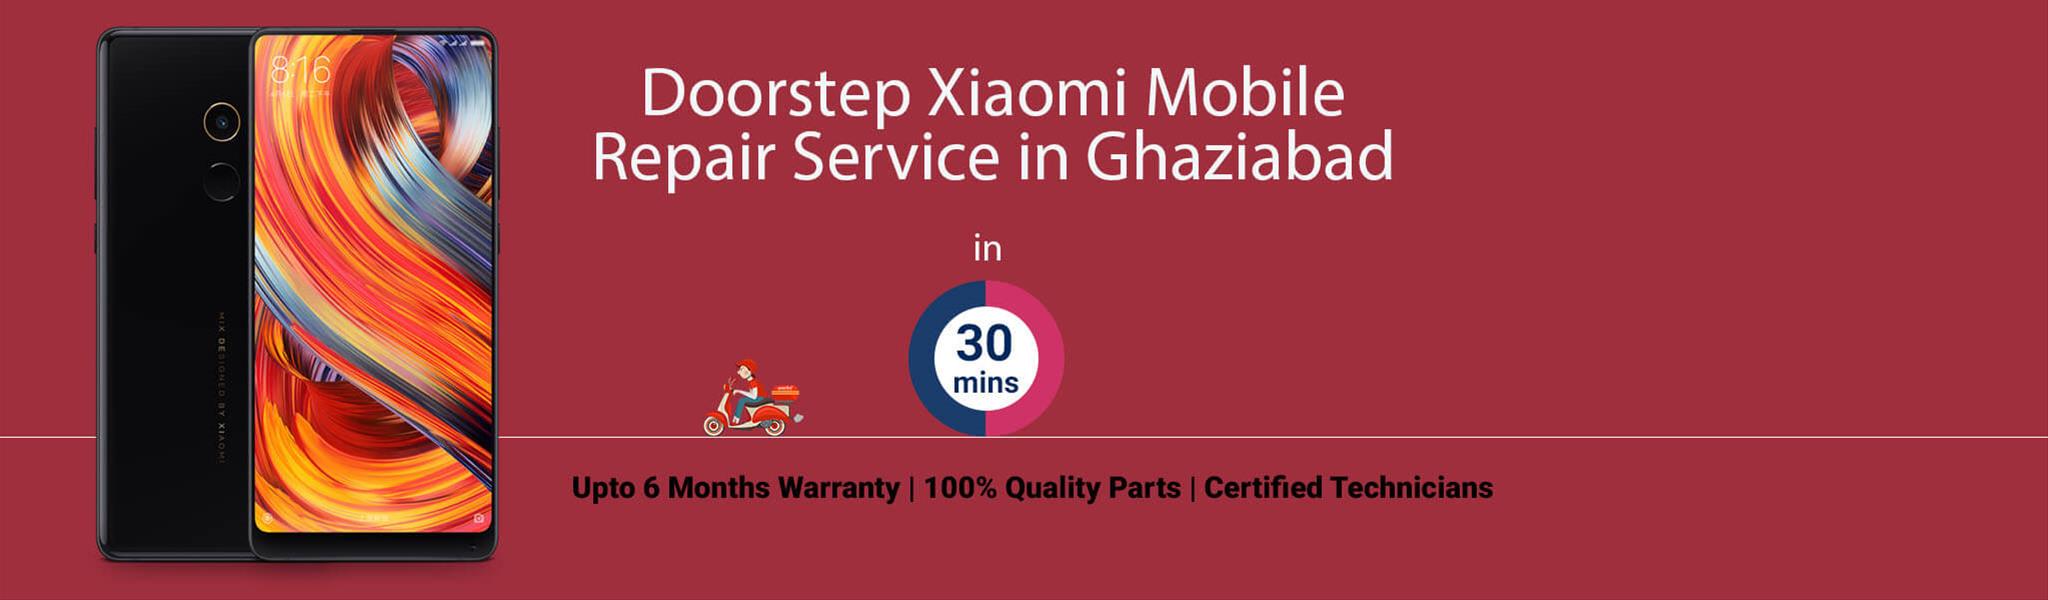 xiaomi-repair-service-banner-ghaziabad.jpg